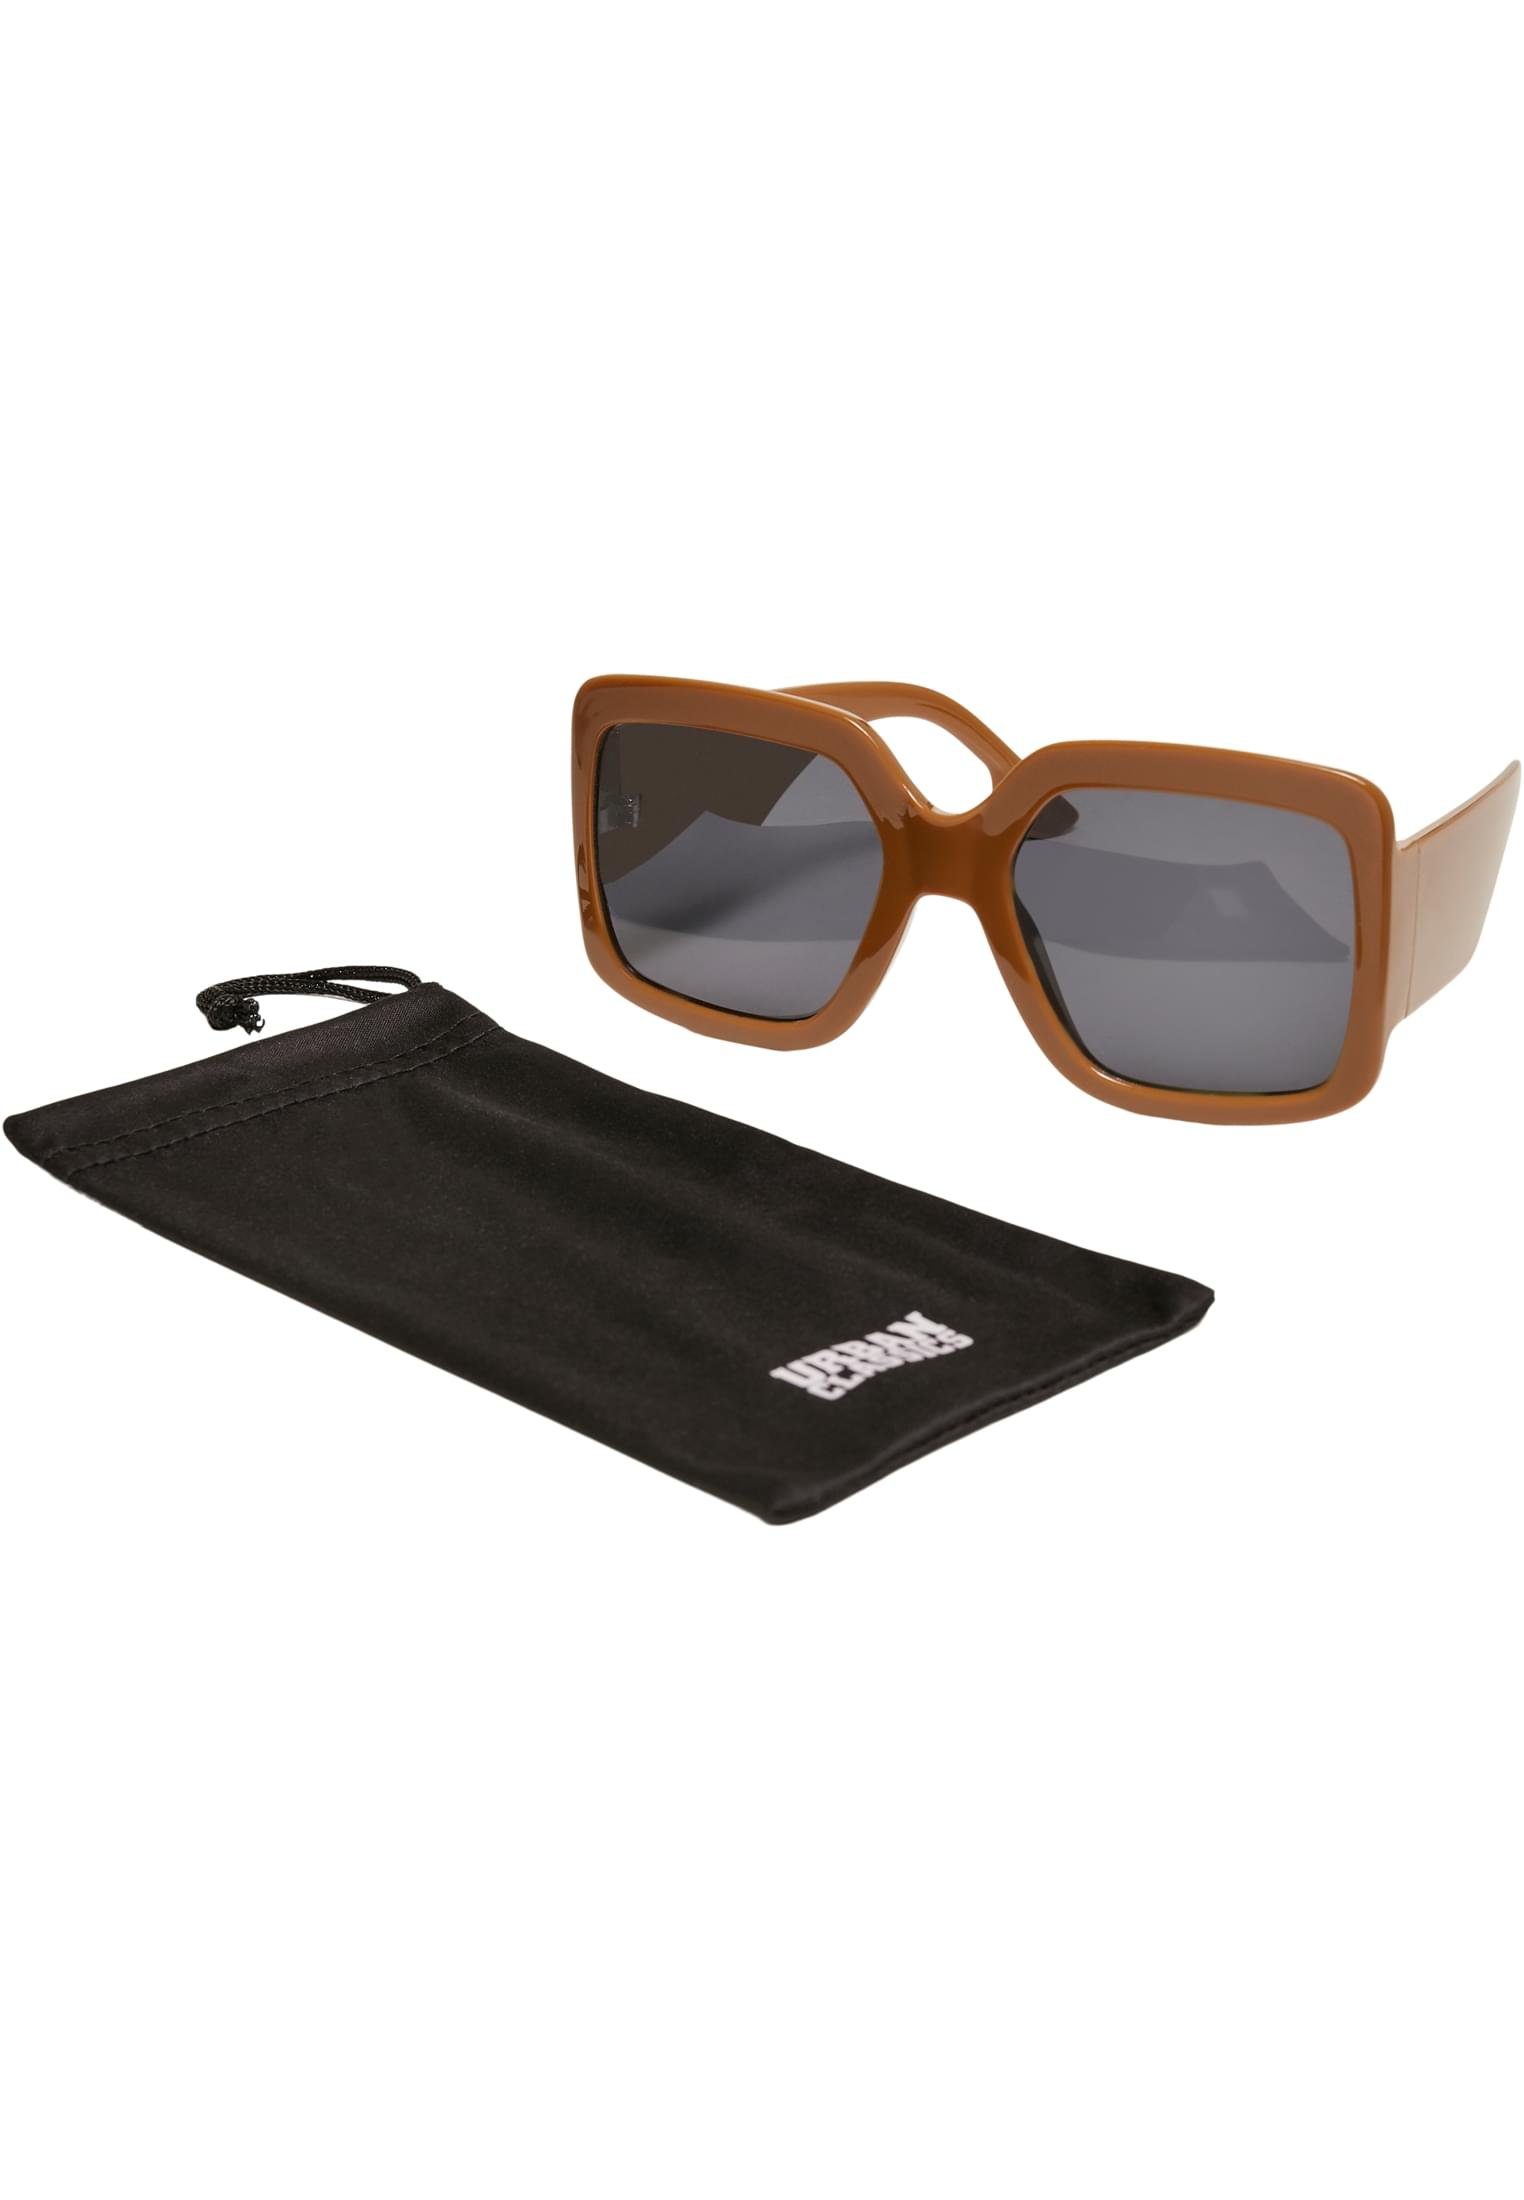 URBAN CLASSICS Sonnenbrille Accessoires Sunglasses Monaco toffee